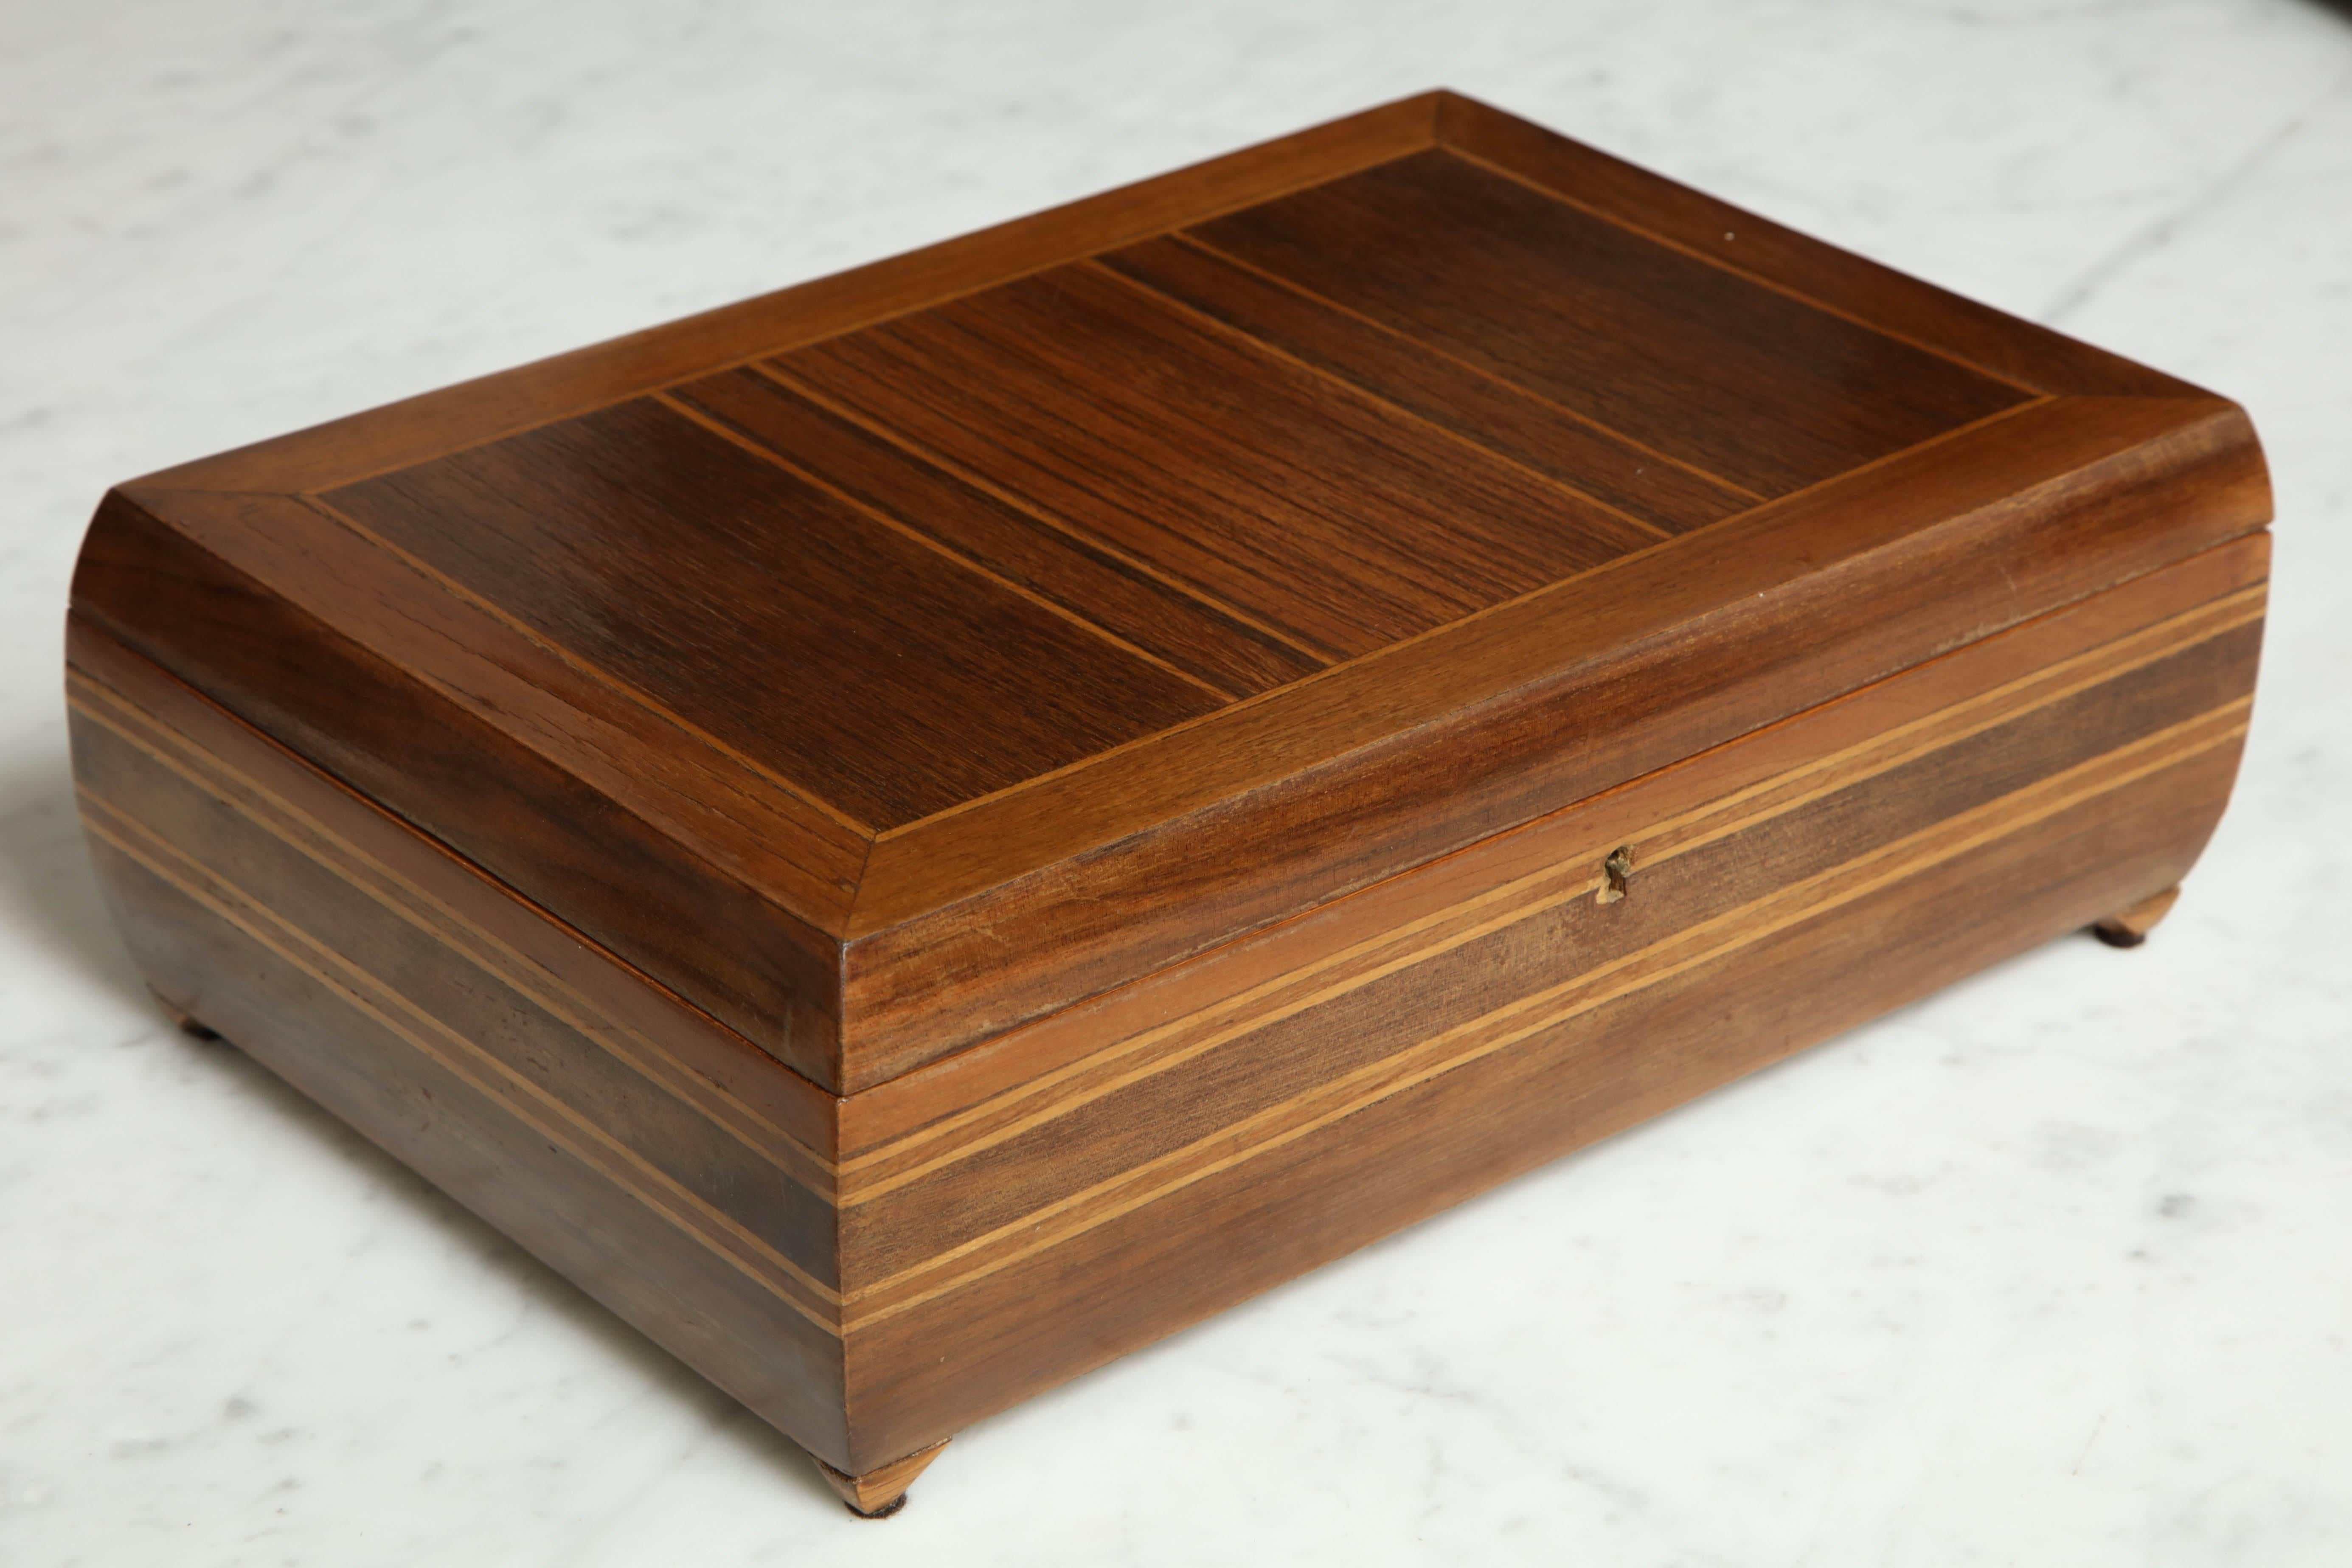 Early 20th century mixed wood rectangular box
Italian, circa 1920-1930.